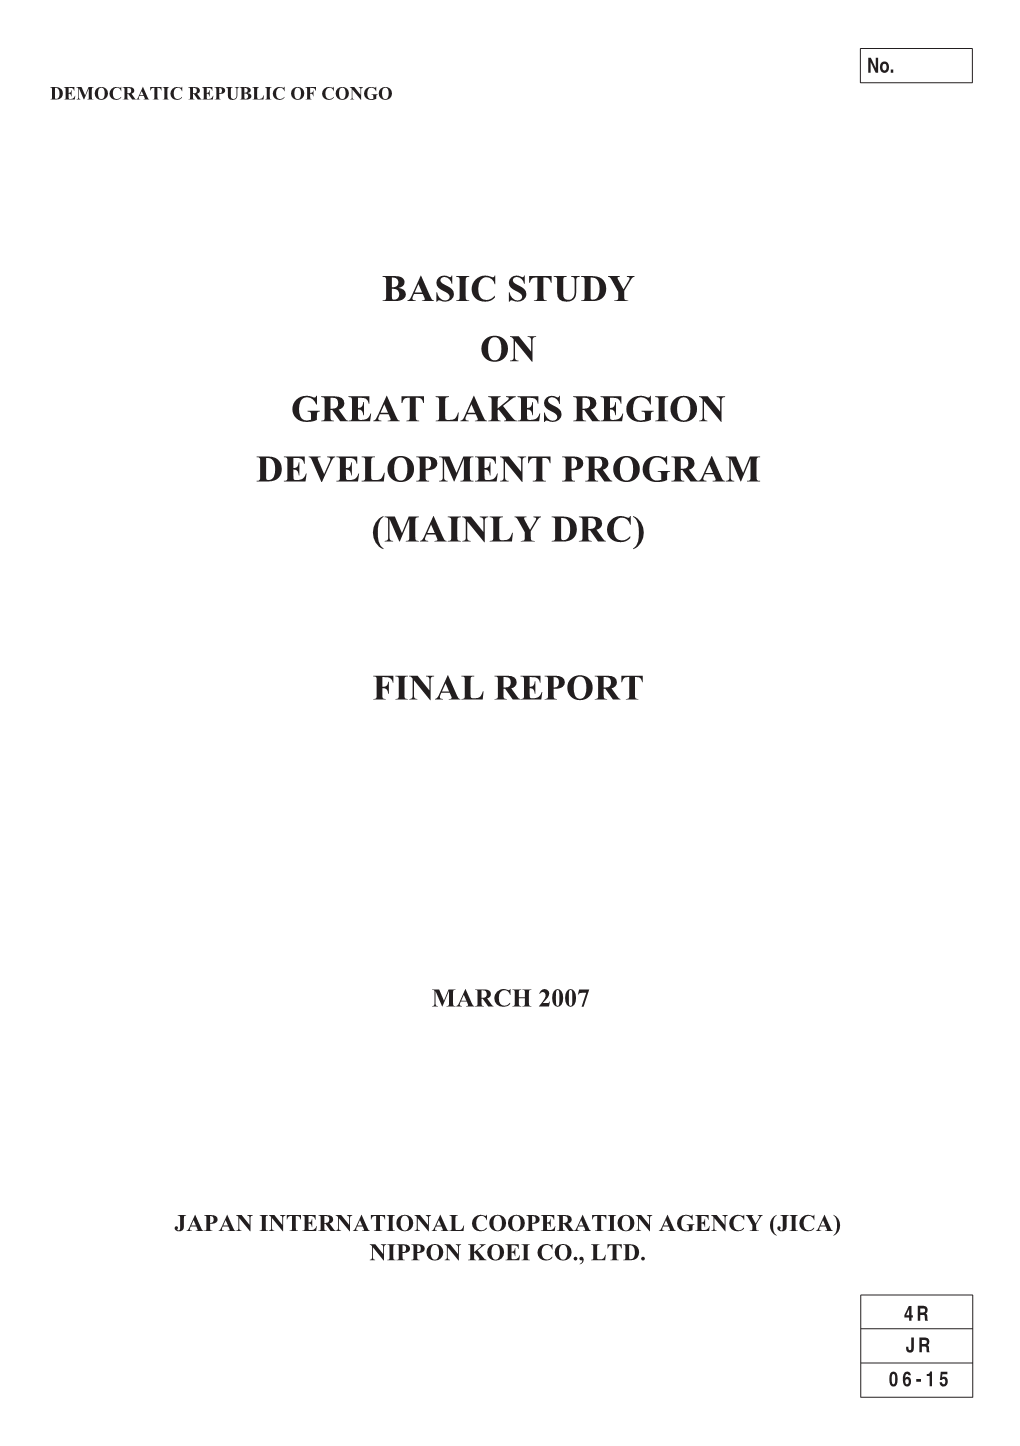 Mainly Drc) Basic Study on Great Lakes Region Democratic Republic of Congo